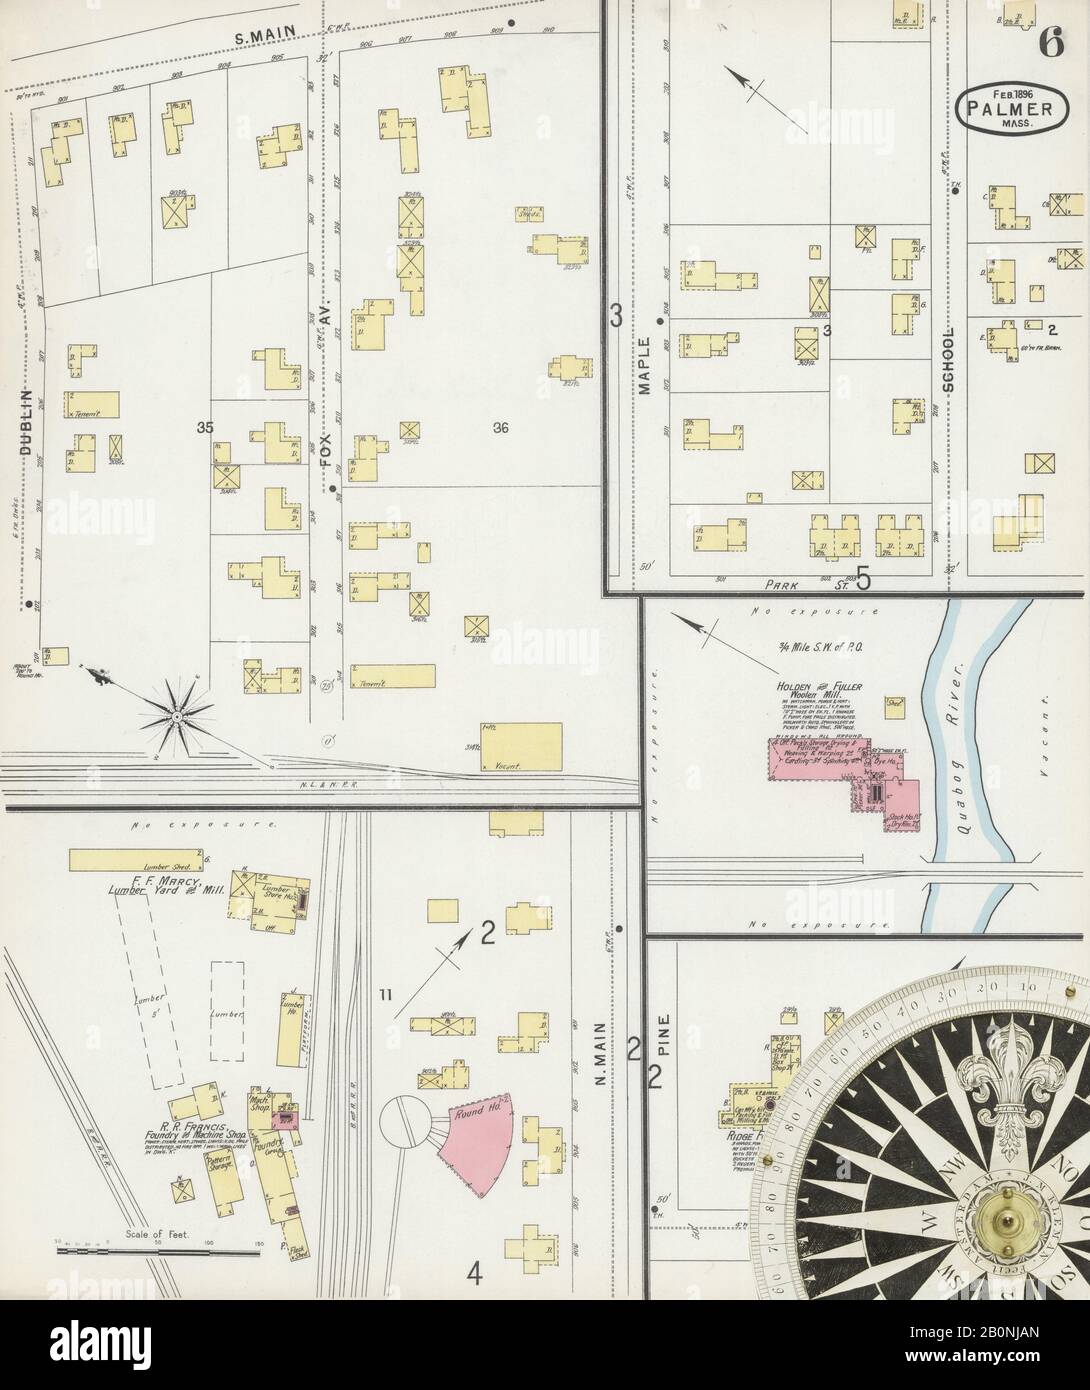 Bild 6 von Sanborn Fire Insurance Map aus Palmer, Hampden County, Massachusetts. Feb. 6 Blatt(e), Amerika, Straßenkarte mit einem Kompass Aus Dem 19. Jahrhundert Stockfoto